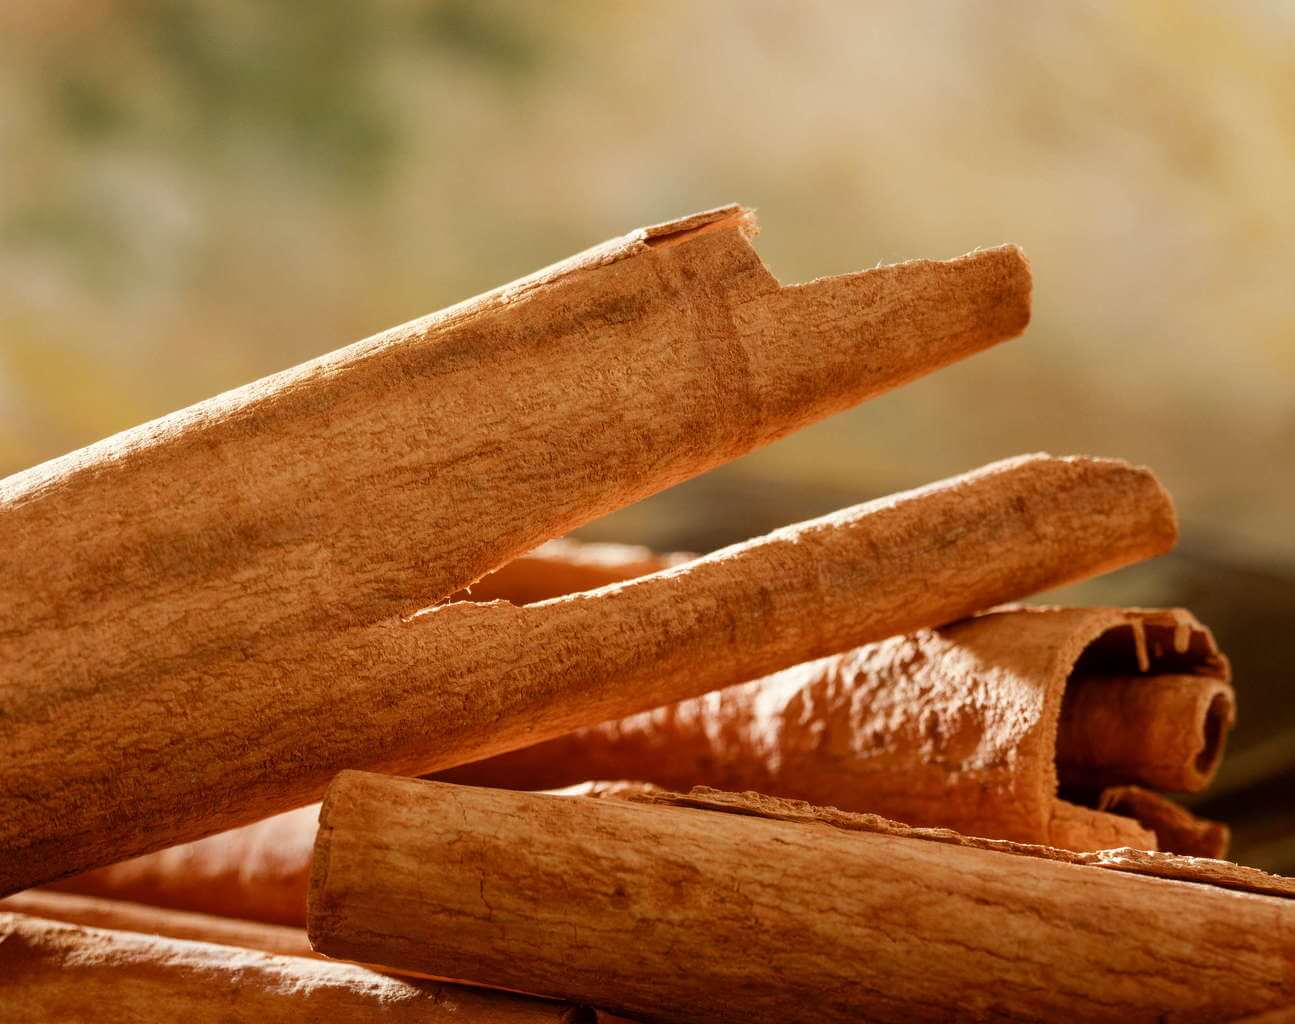 Cinnamon quills from Cinnamomum verum. The spice is also called true cinnamon.